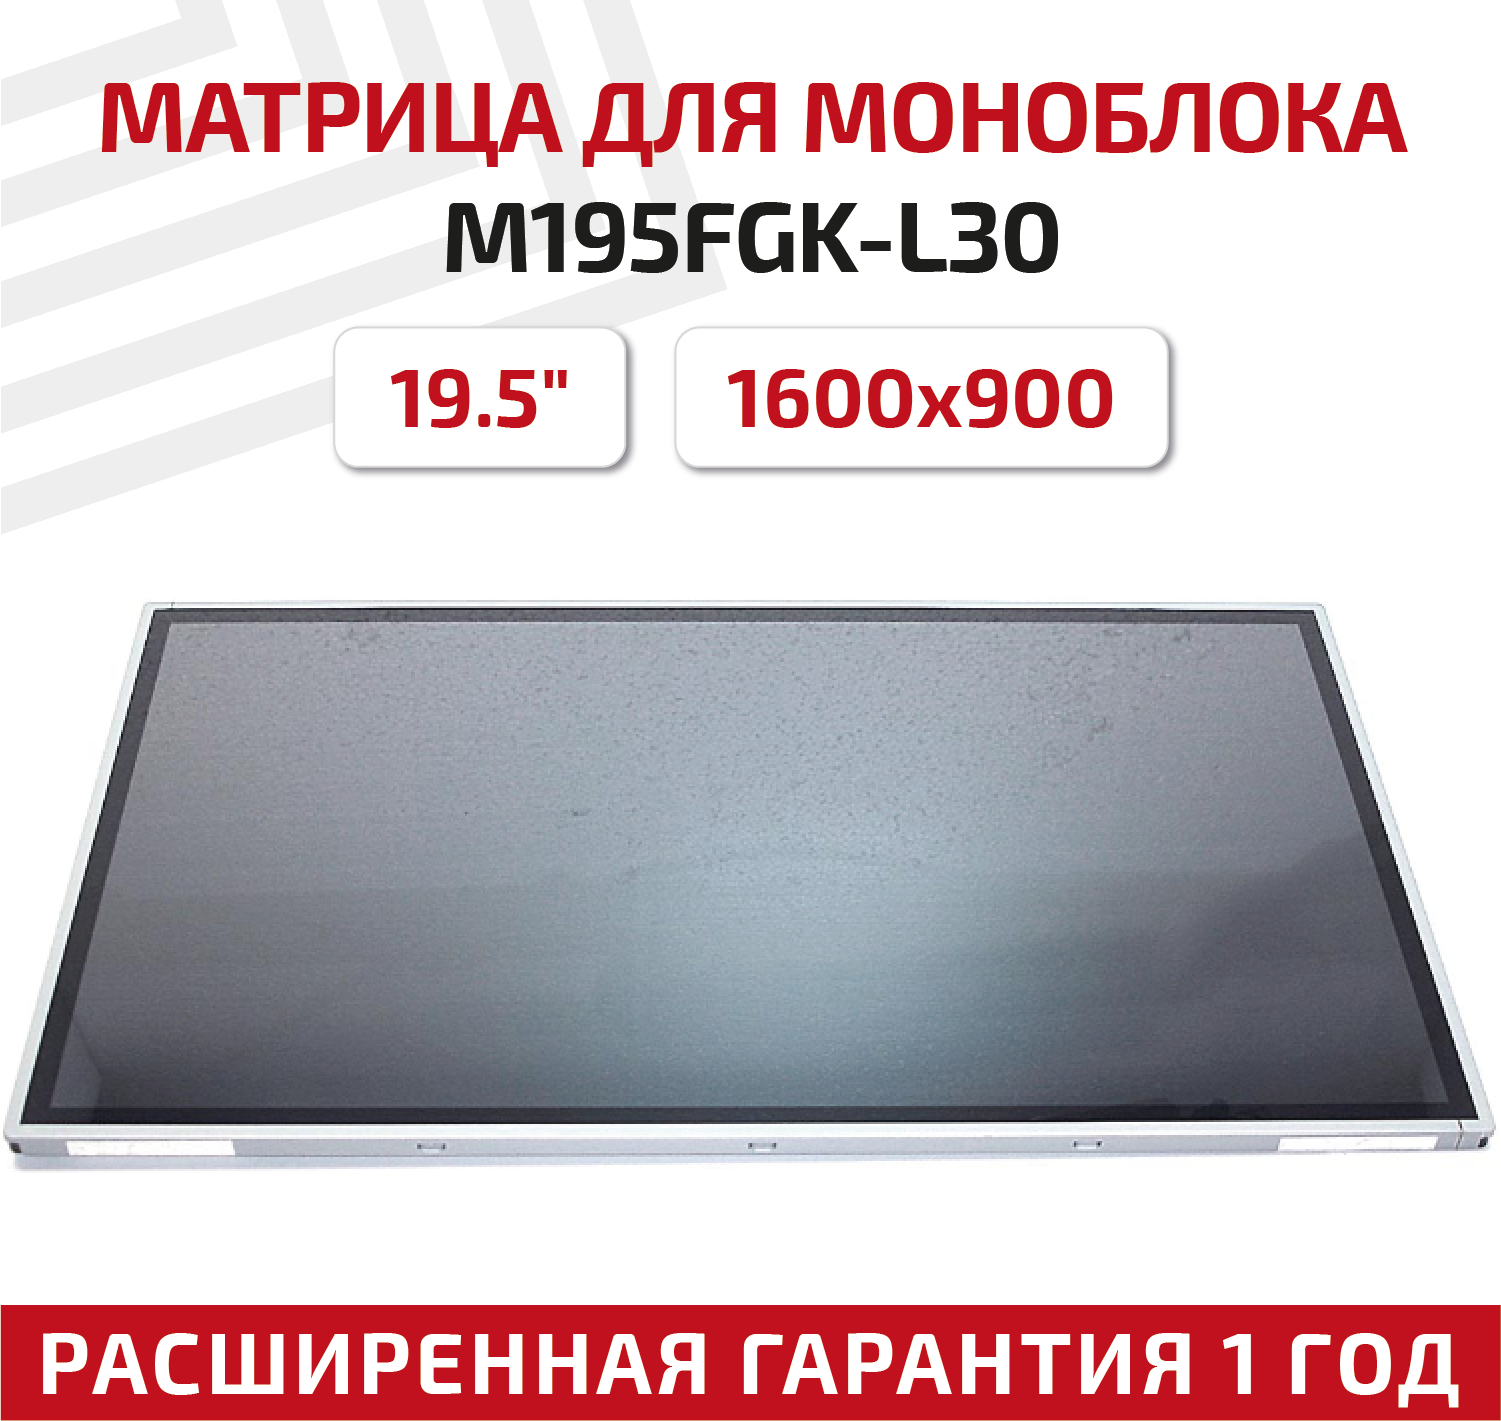 Матрица для моноблока M195FGK-L30 19.5" 1600x900 светодиодная (LED) матовая